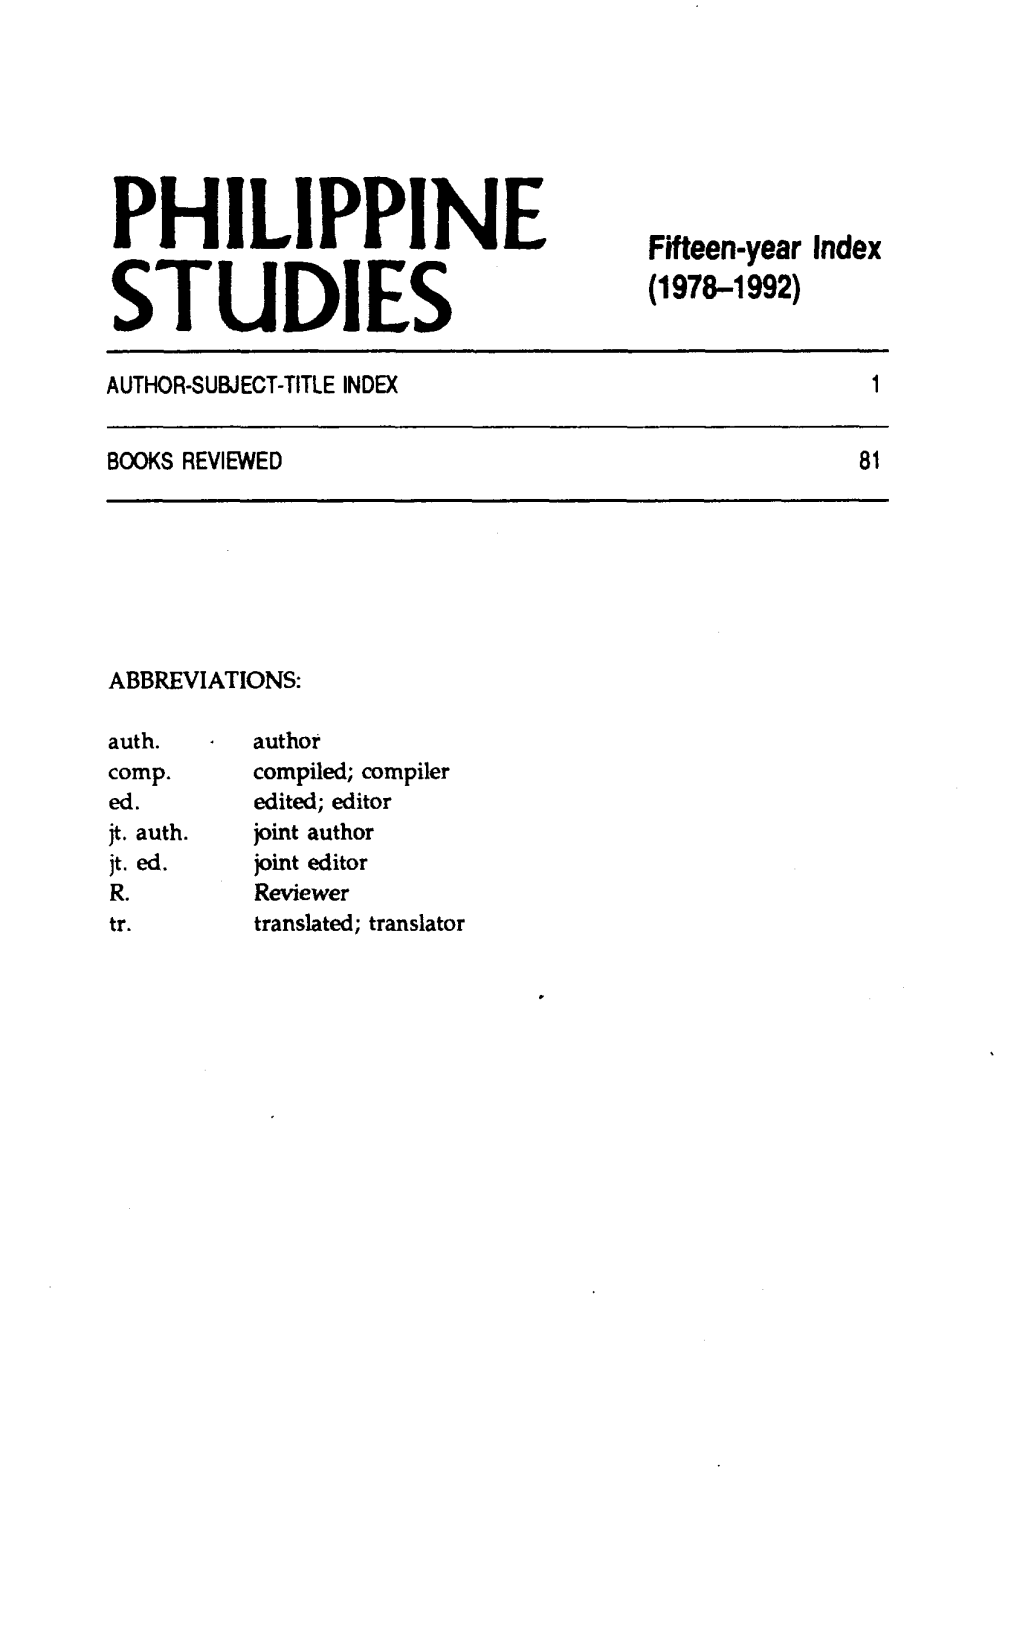 PHILIPPINE Fieen-Yearindex STUDIES (1978-1 992) - - AUTHOR-SUBJECT-TITLE INDEX